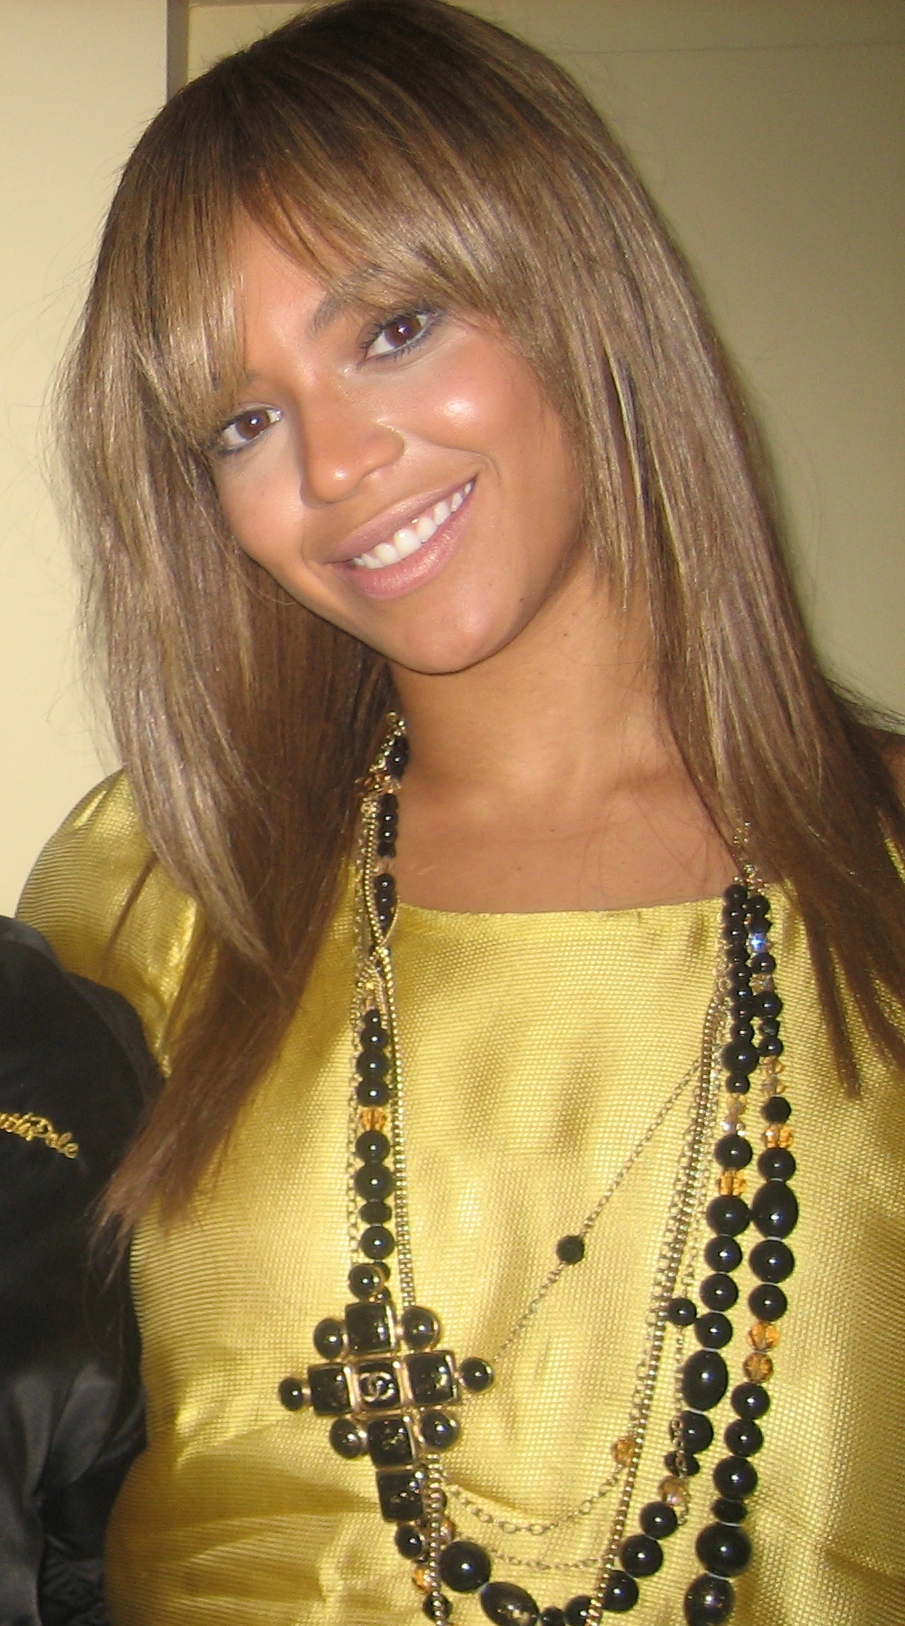 File:Beyonce in 2008.jpg - Wikimedia Commons